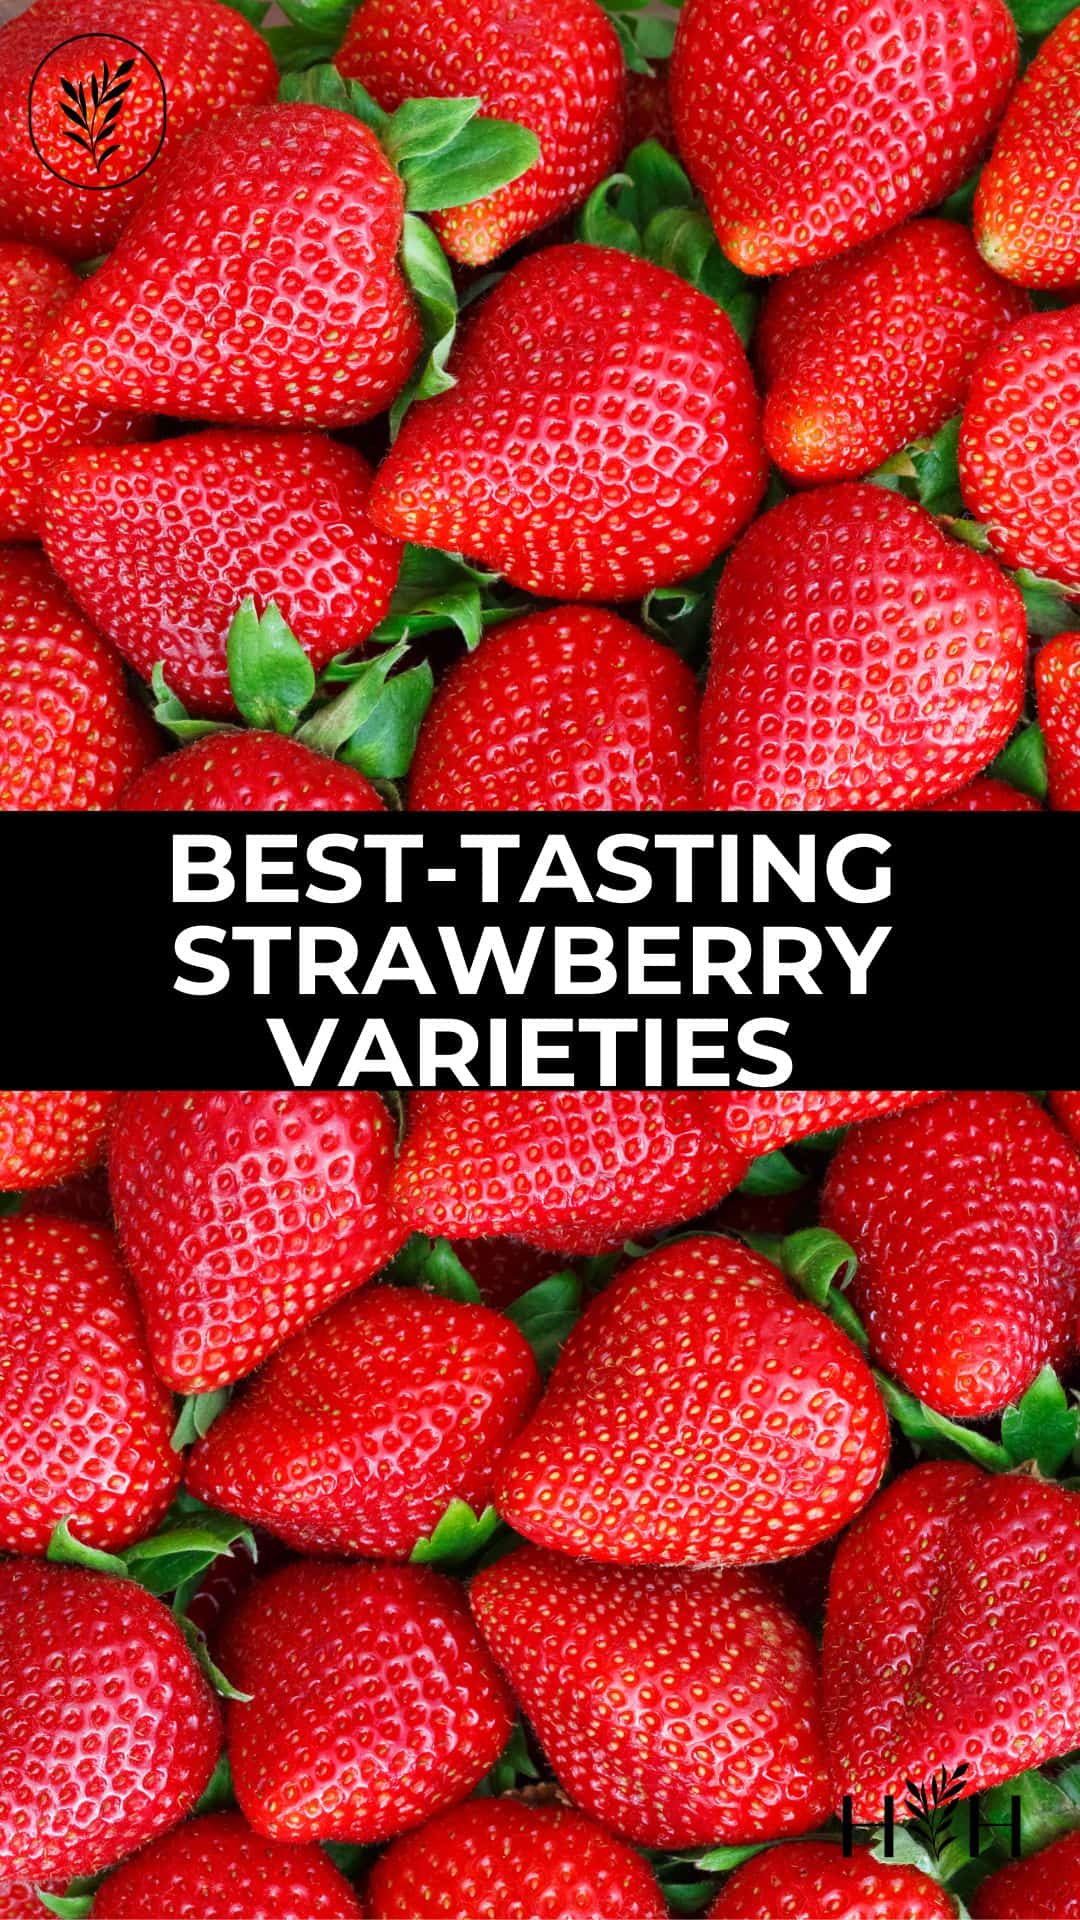 Best tasting strawberry varieties via @home4theharvest